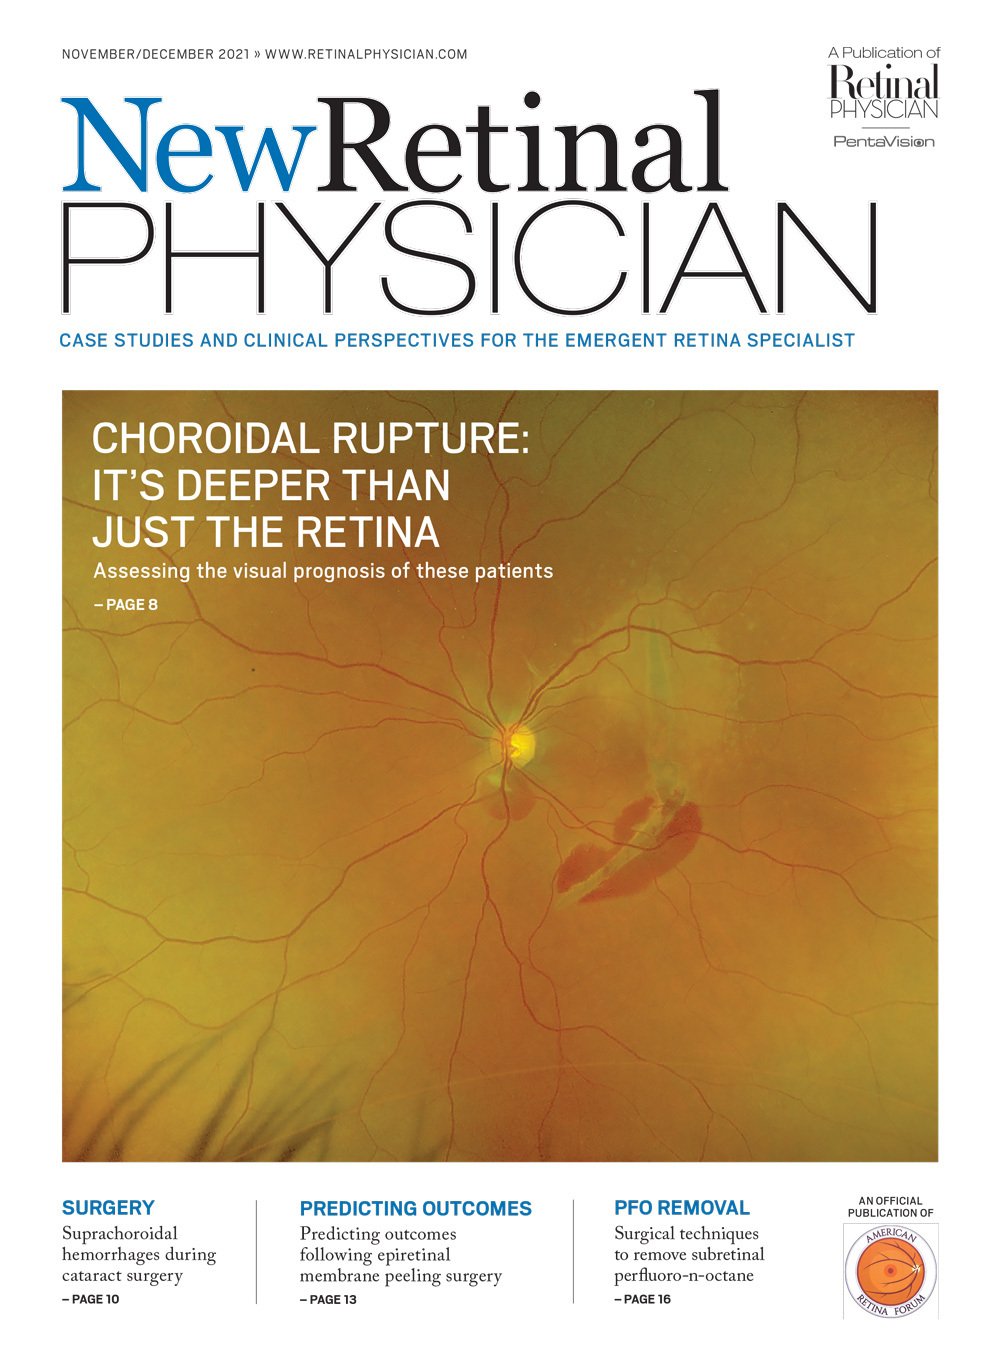 New Retinal Physician November/December 2021 image